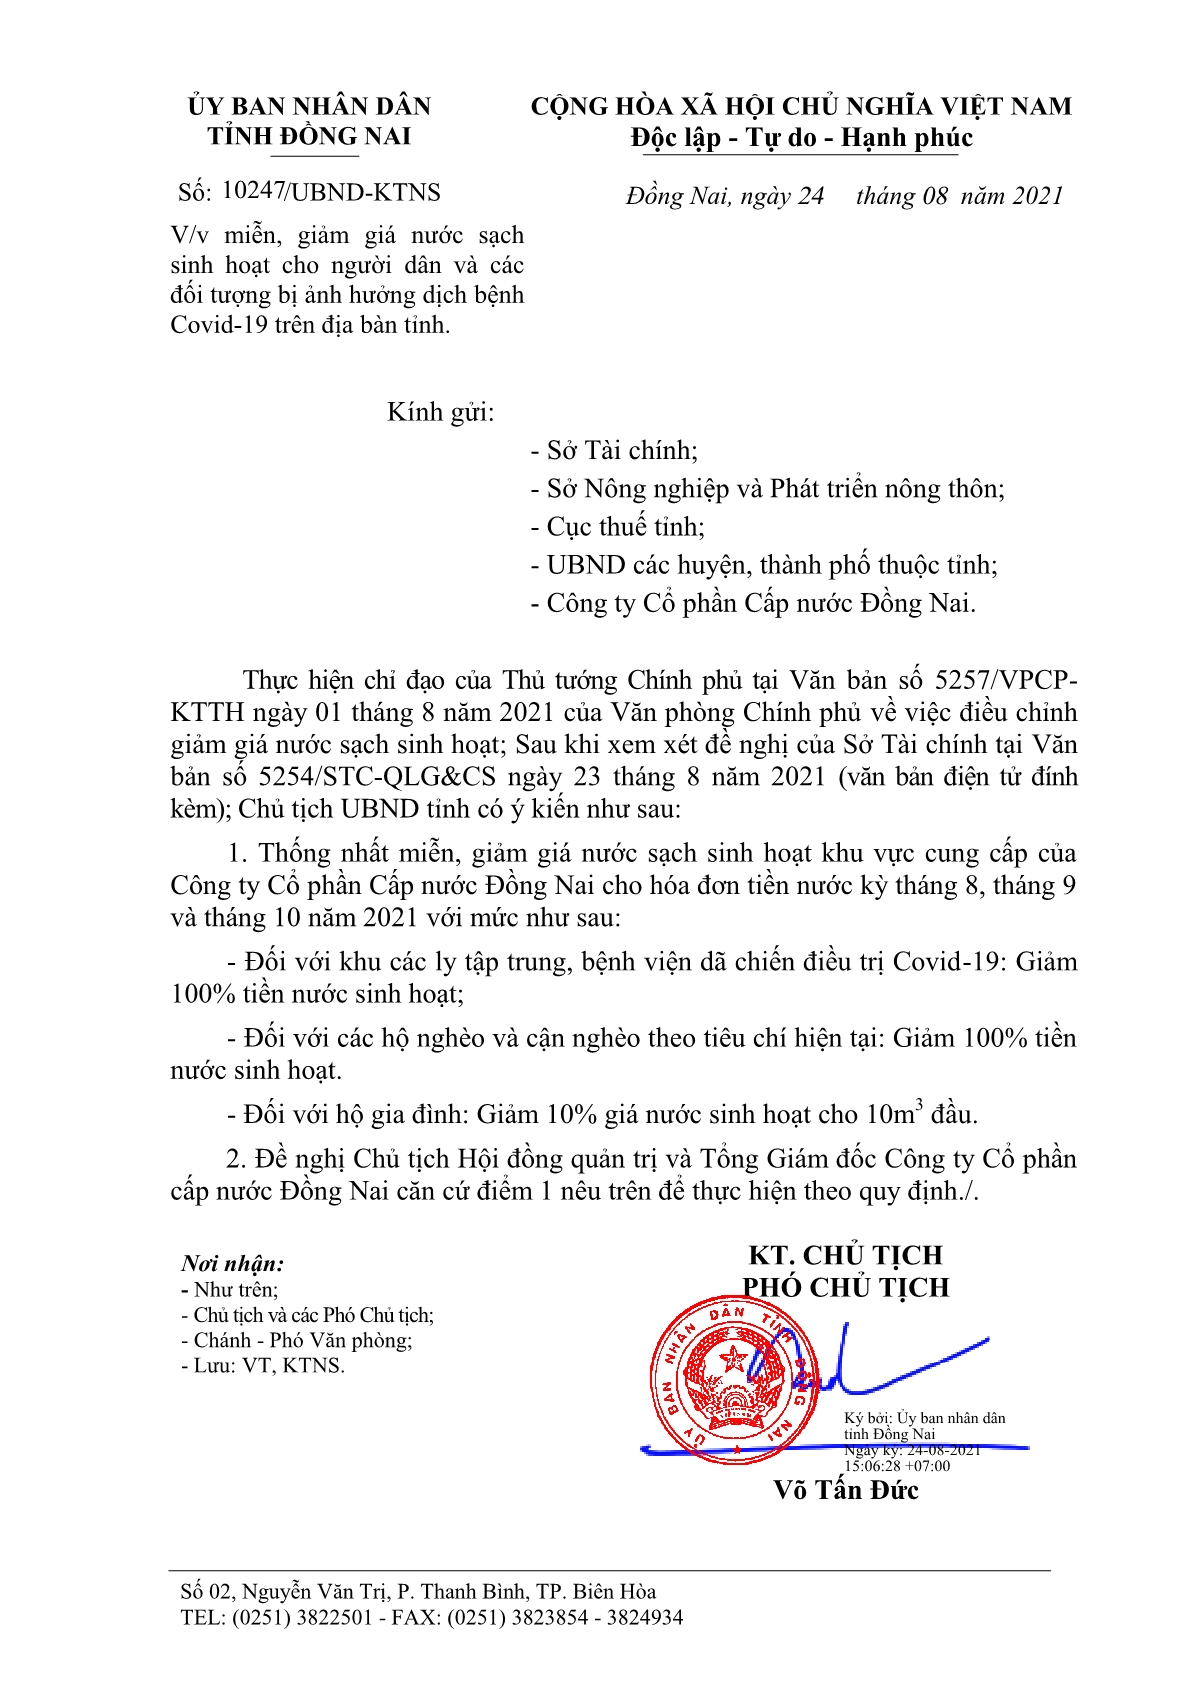 Trinh ky van ban dieu chinh giam gia nuuoc sach sinh hoat (5524)1.jpg